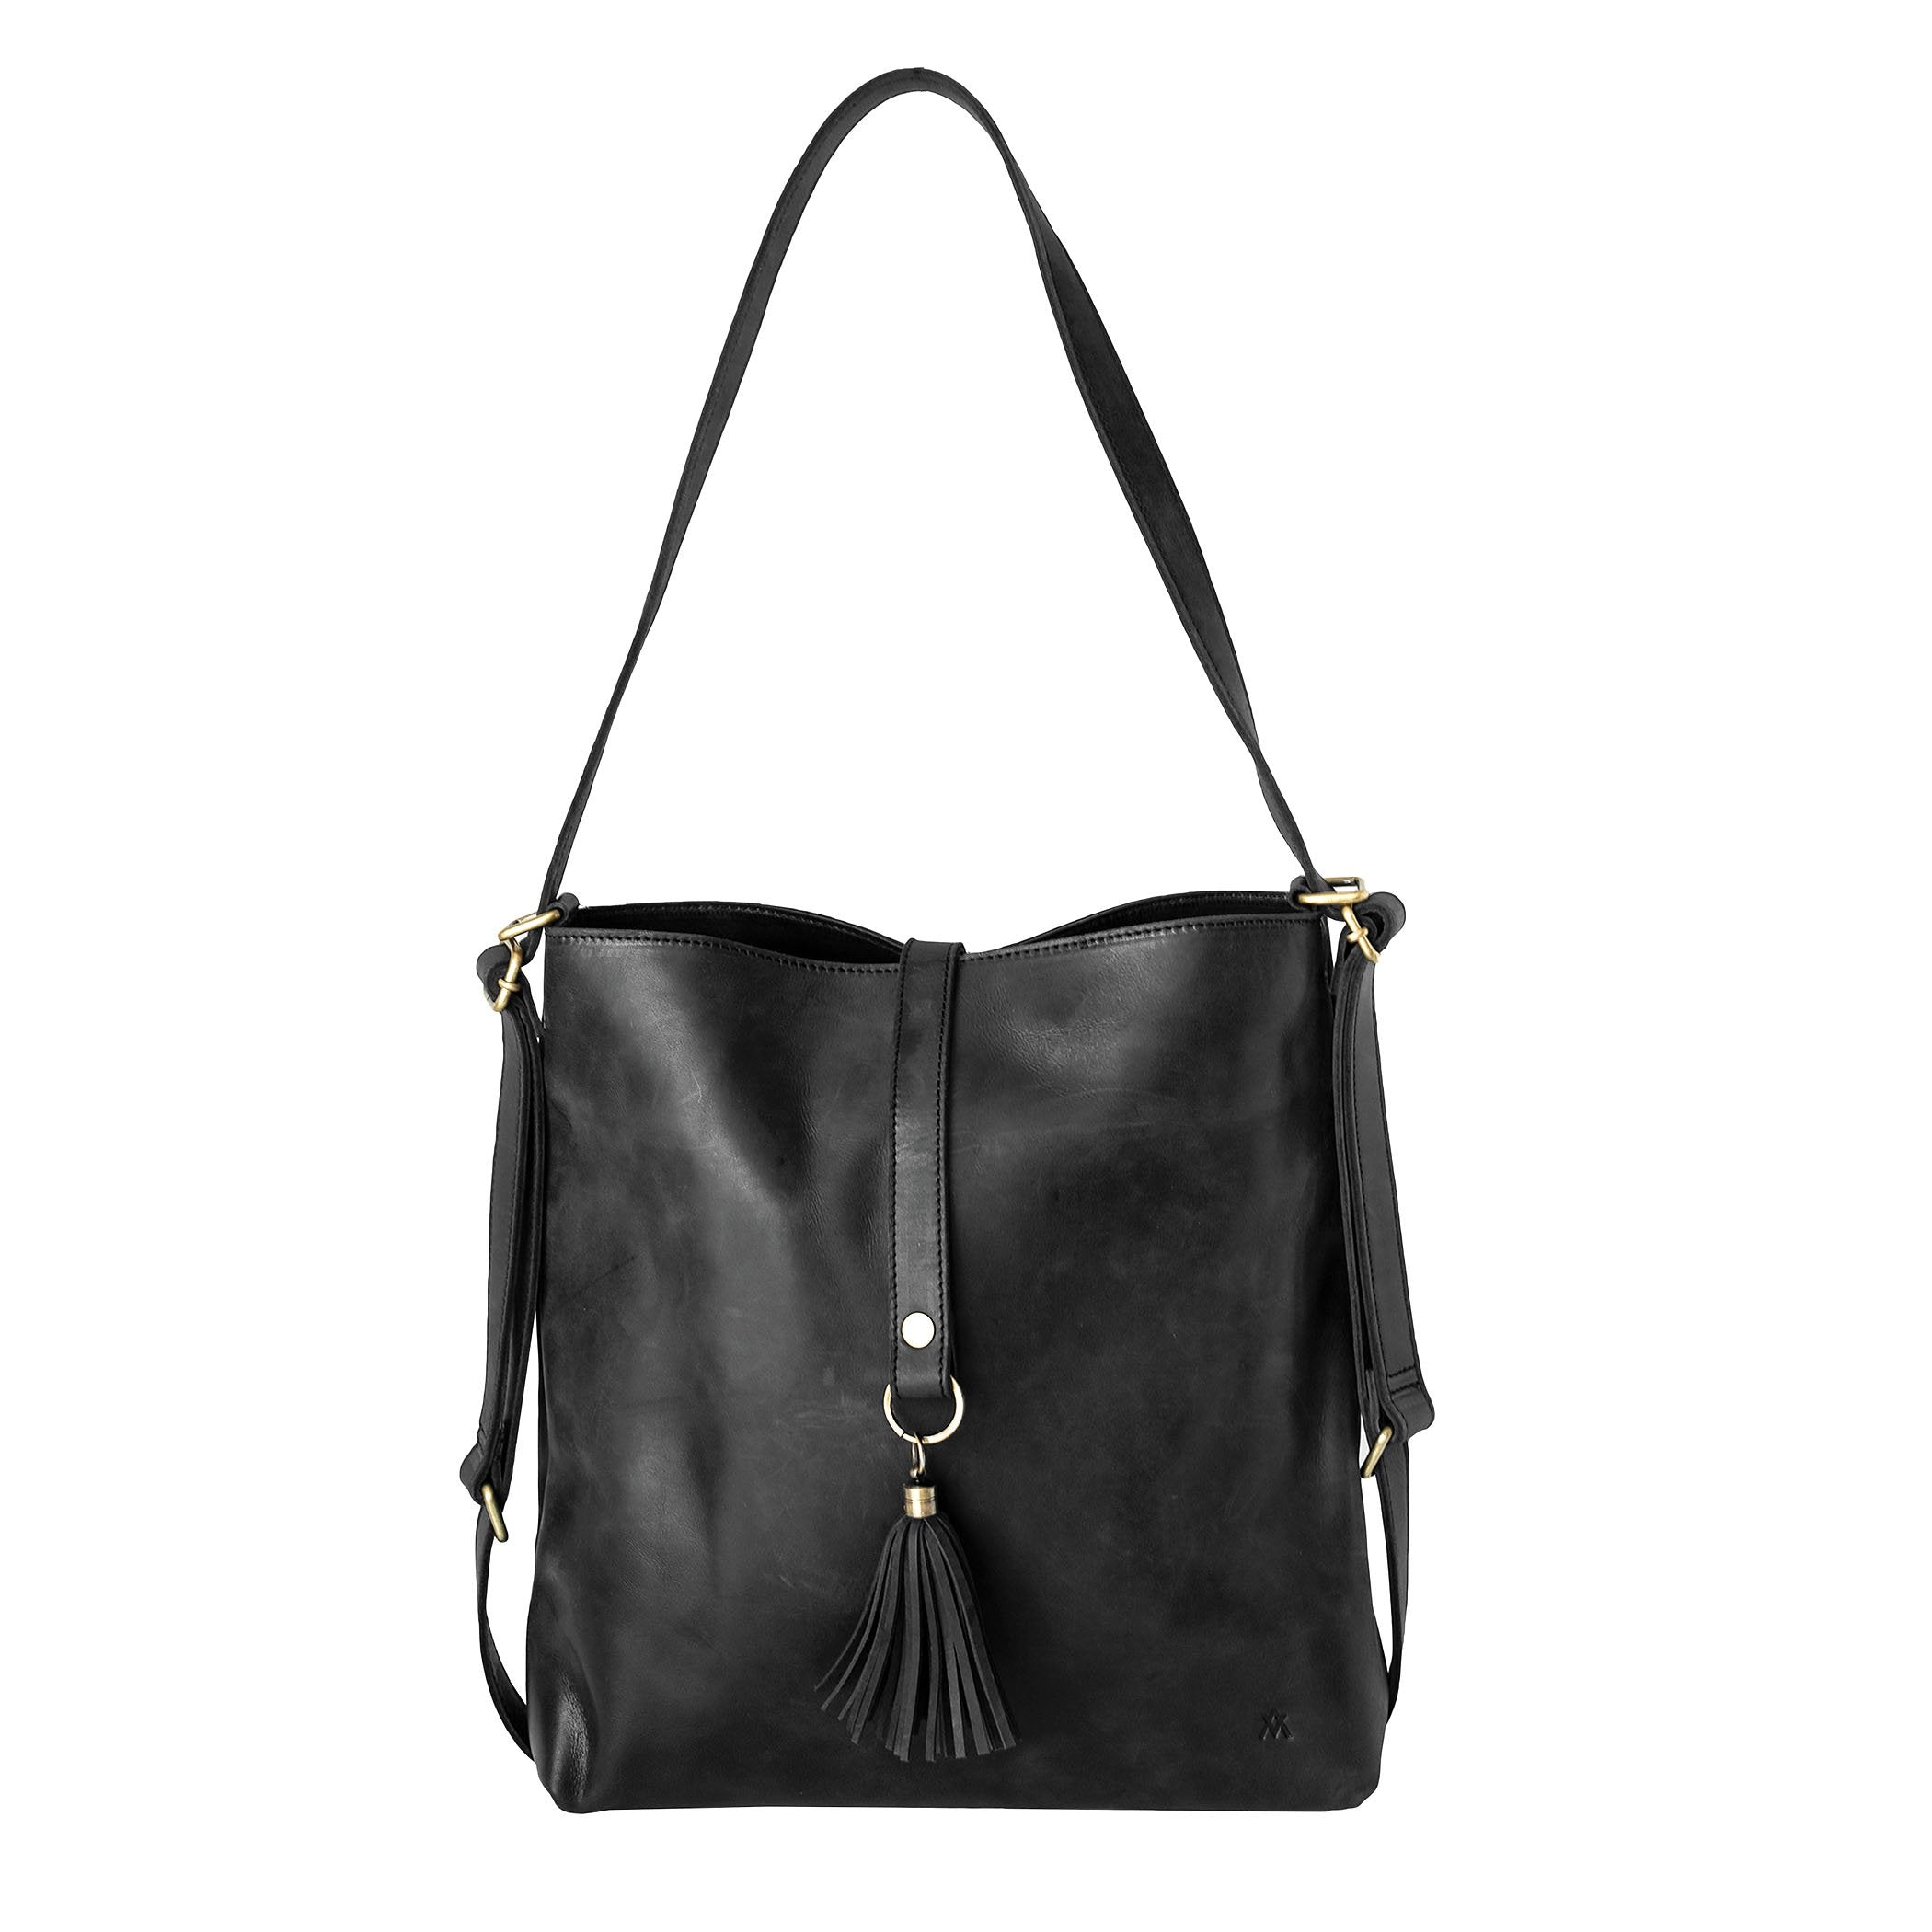 Moda Luxe: Regina Sling Backpack – ESSE Purse Museum & Store